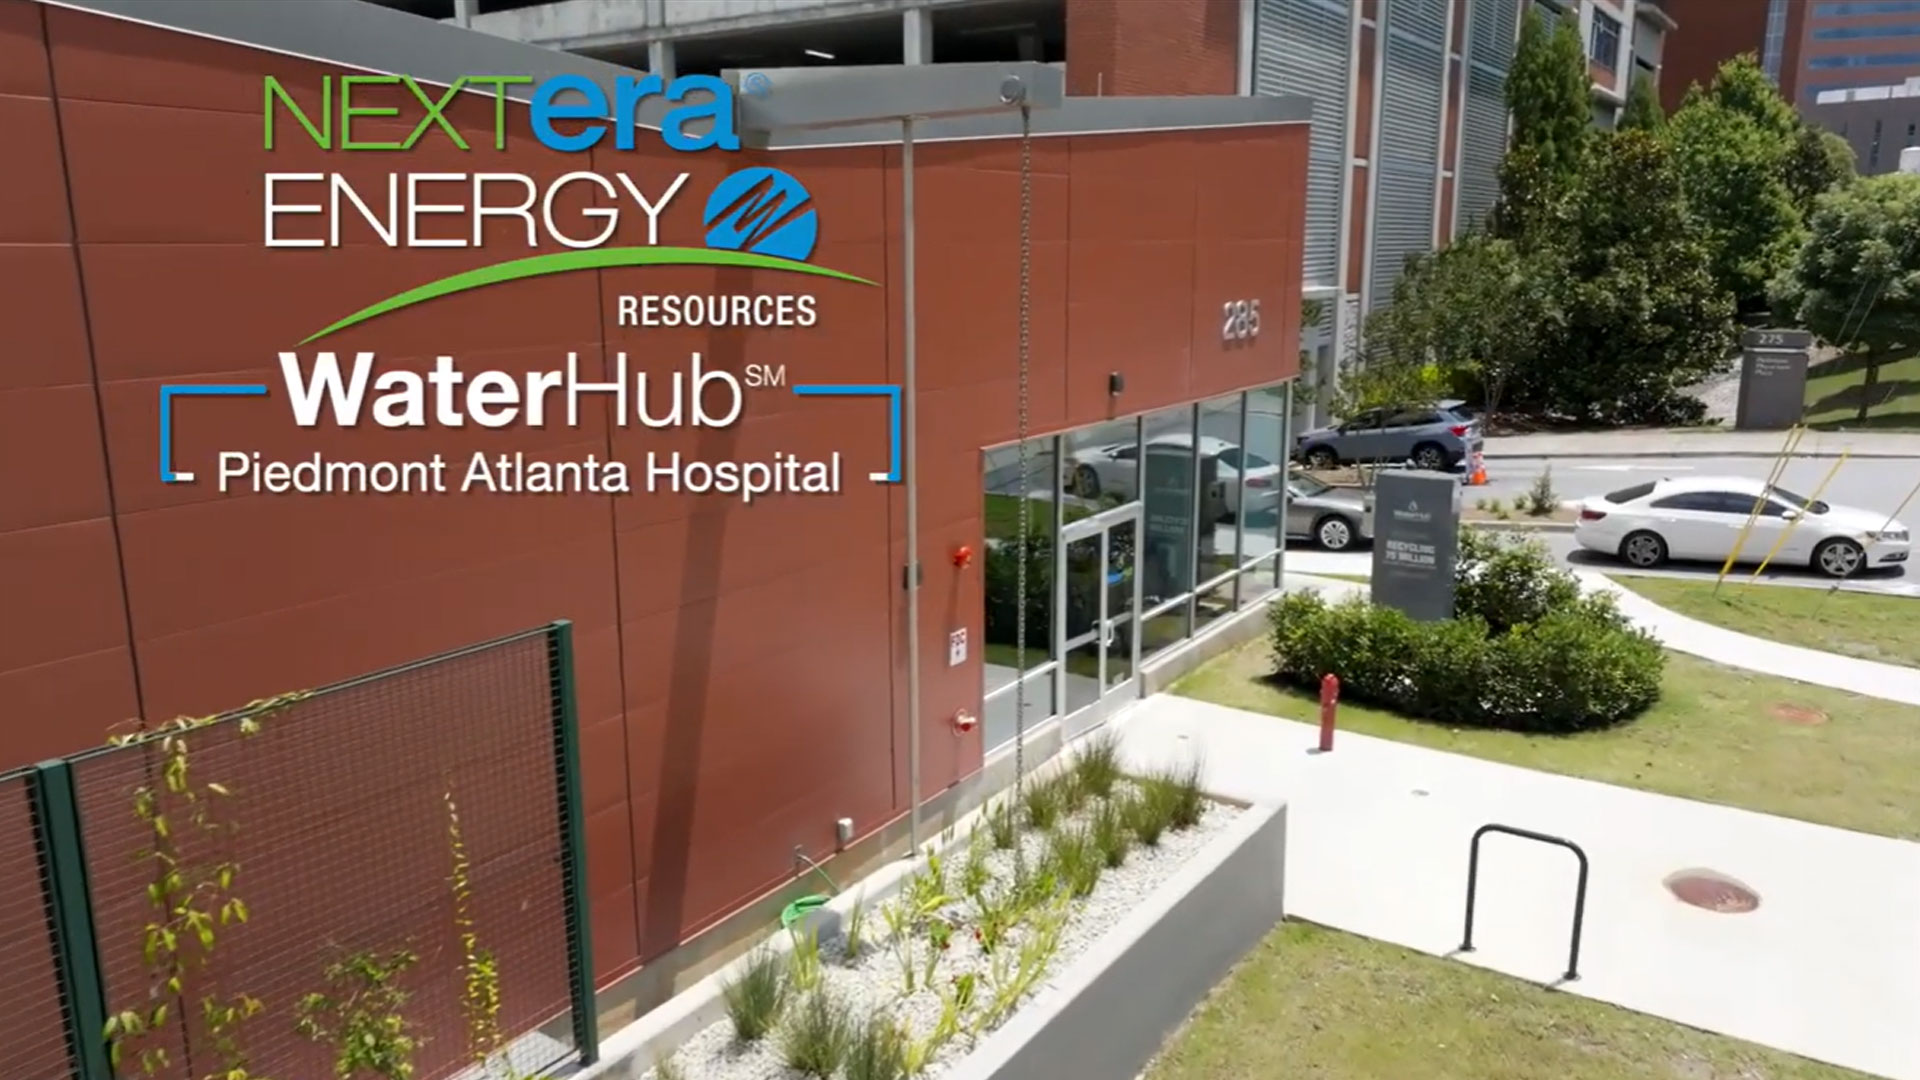 NextEra Energy WaterHub at Piedmont Atlanta Hospital